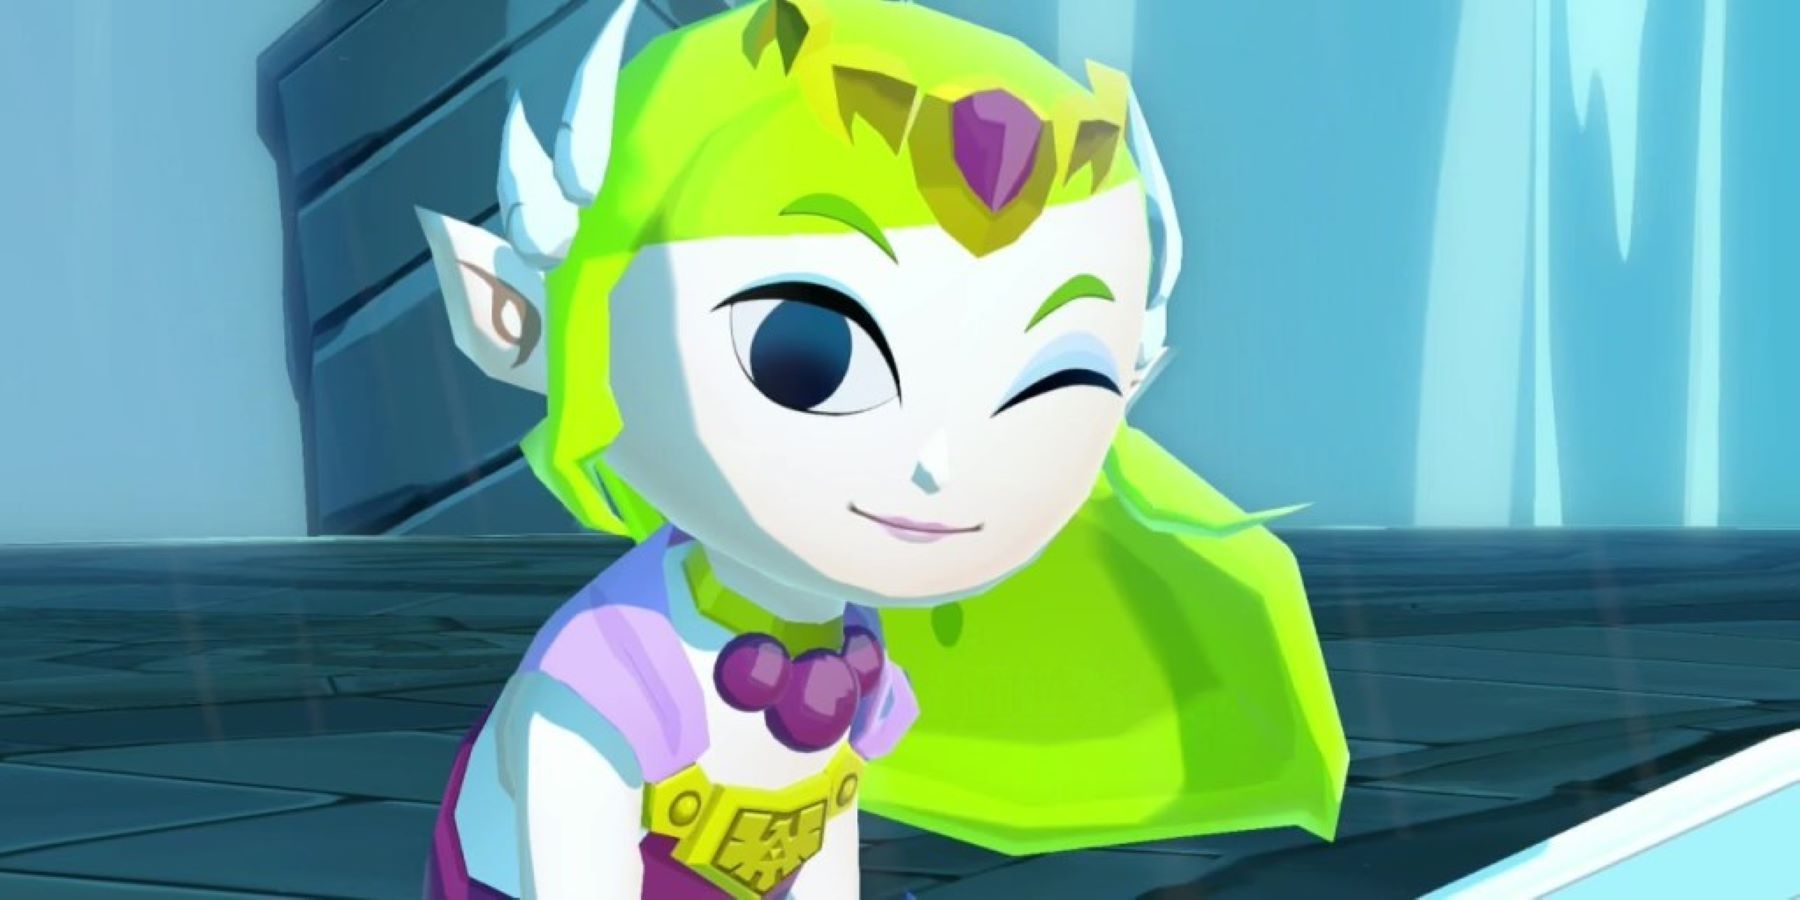 Tetra winking while dressed as Princess Zelda in The Legend of Zelda: Wind Waker